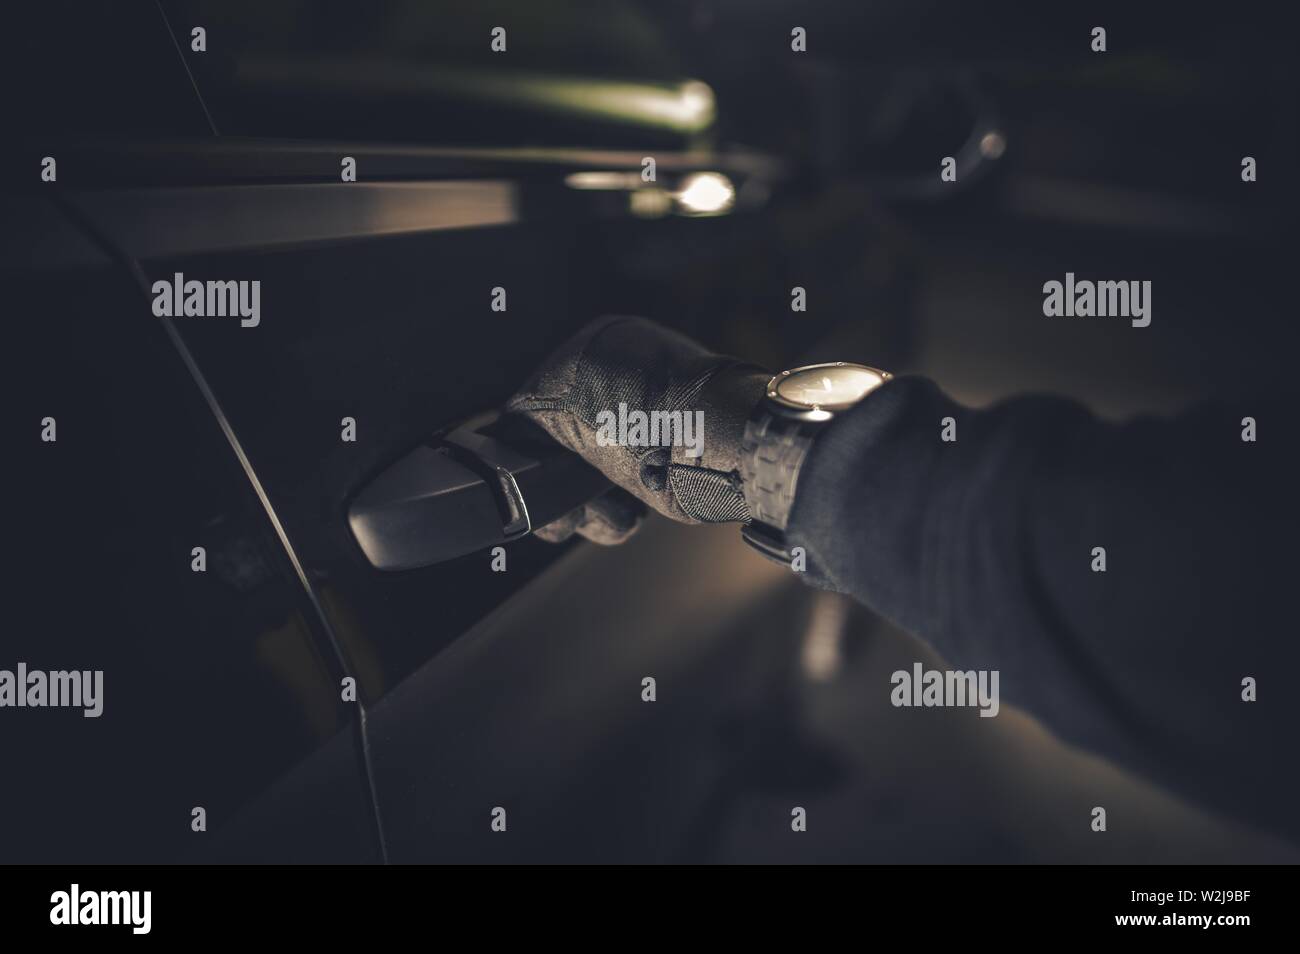 Car Thief Hand on a Door Handle. Grand Theft Auto Concept. Automotive Theme. Stock Photo